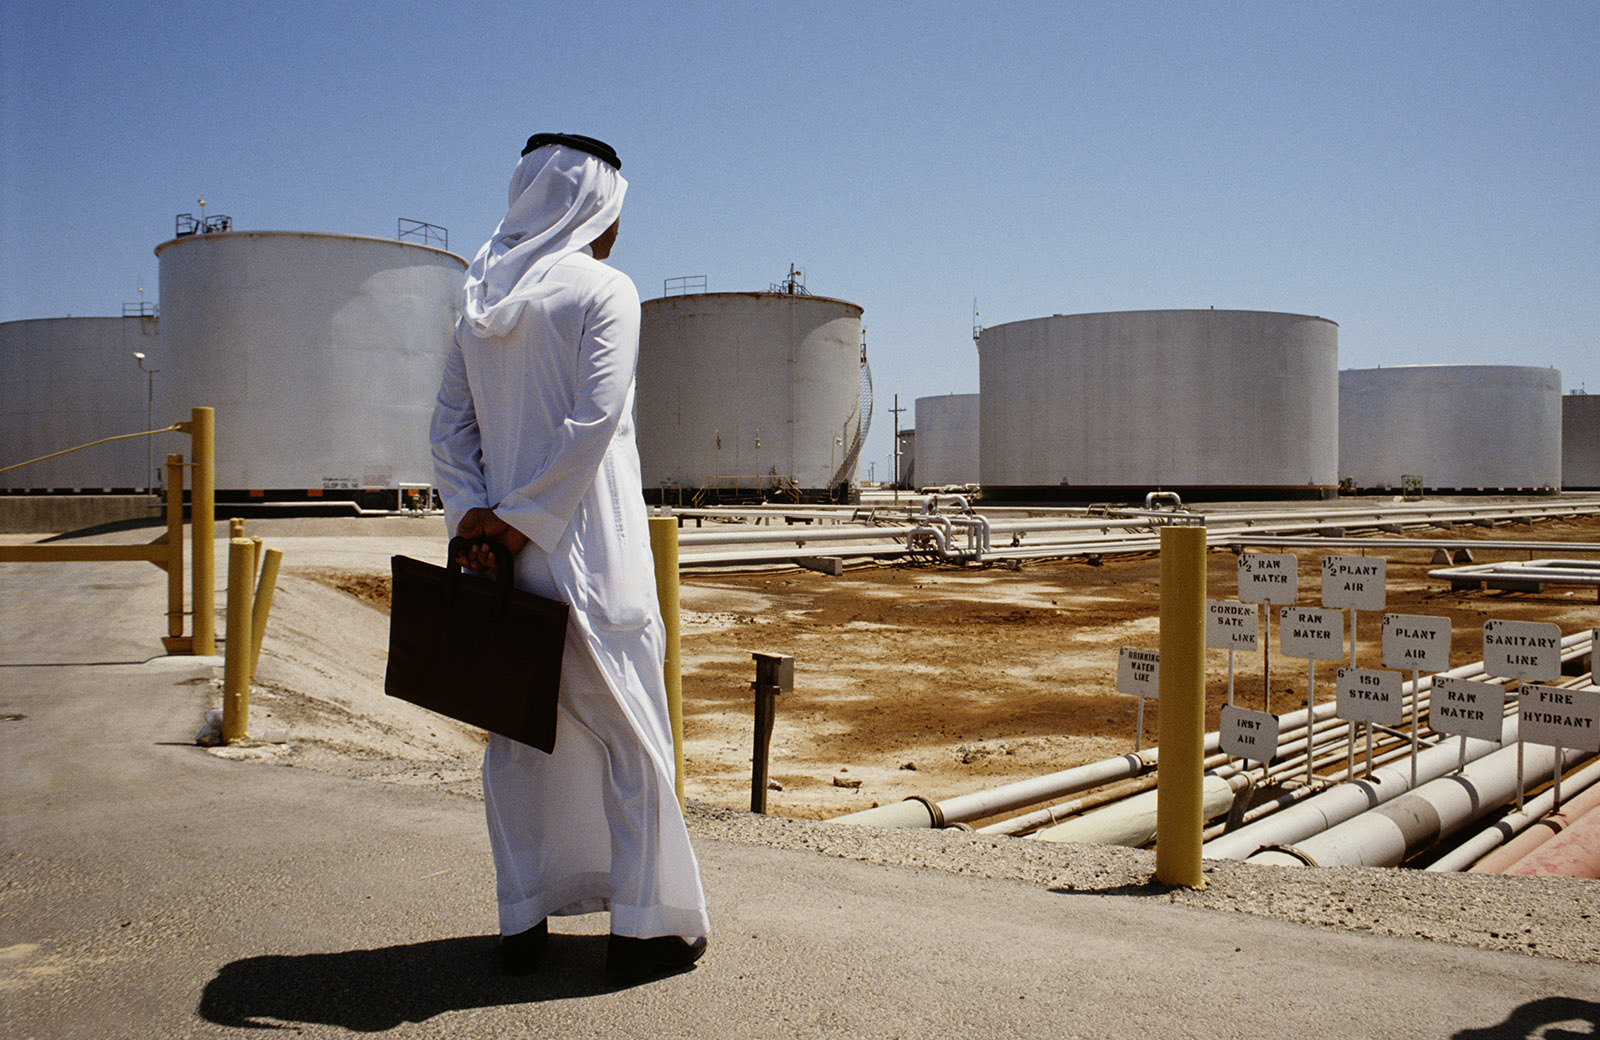 A view of the Aramco oil refinery in Saudi Arabia, 1990